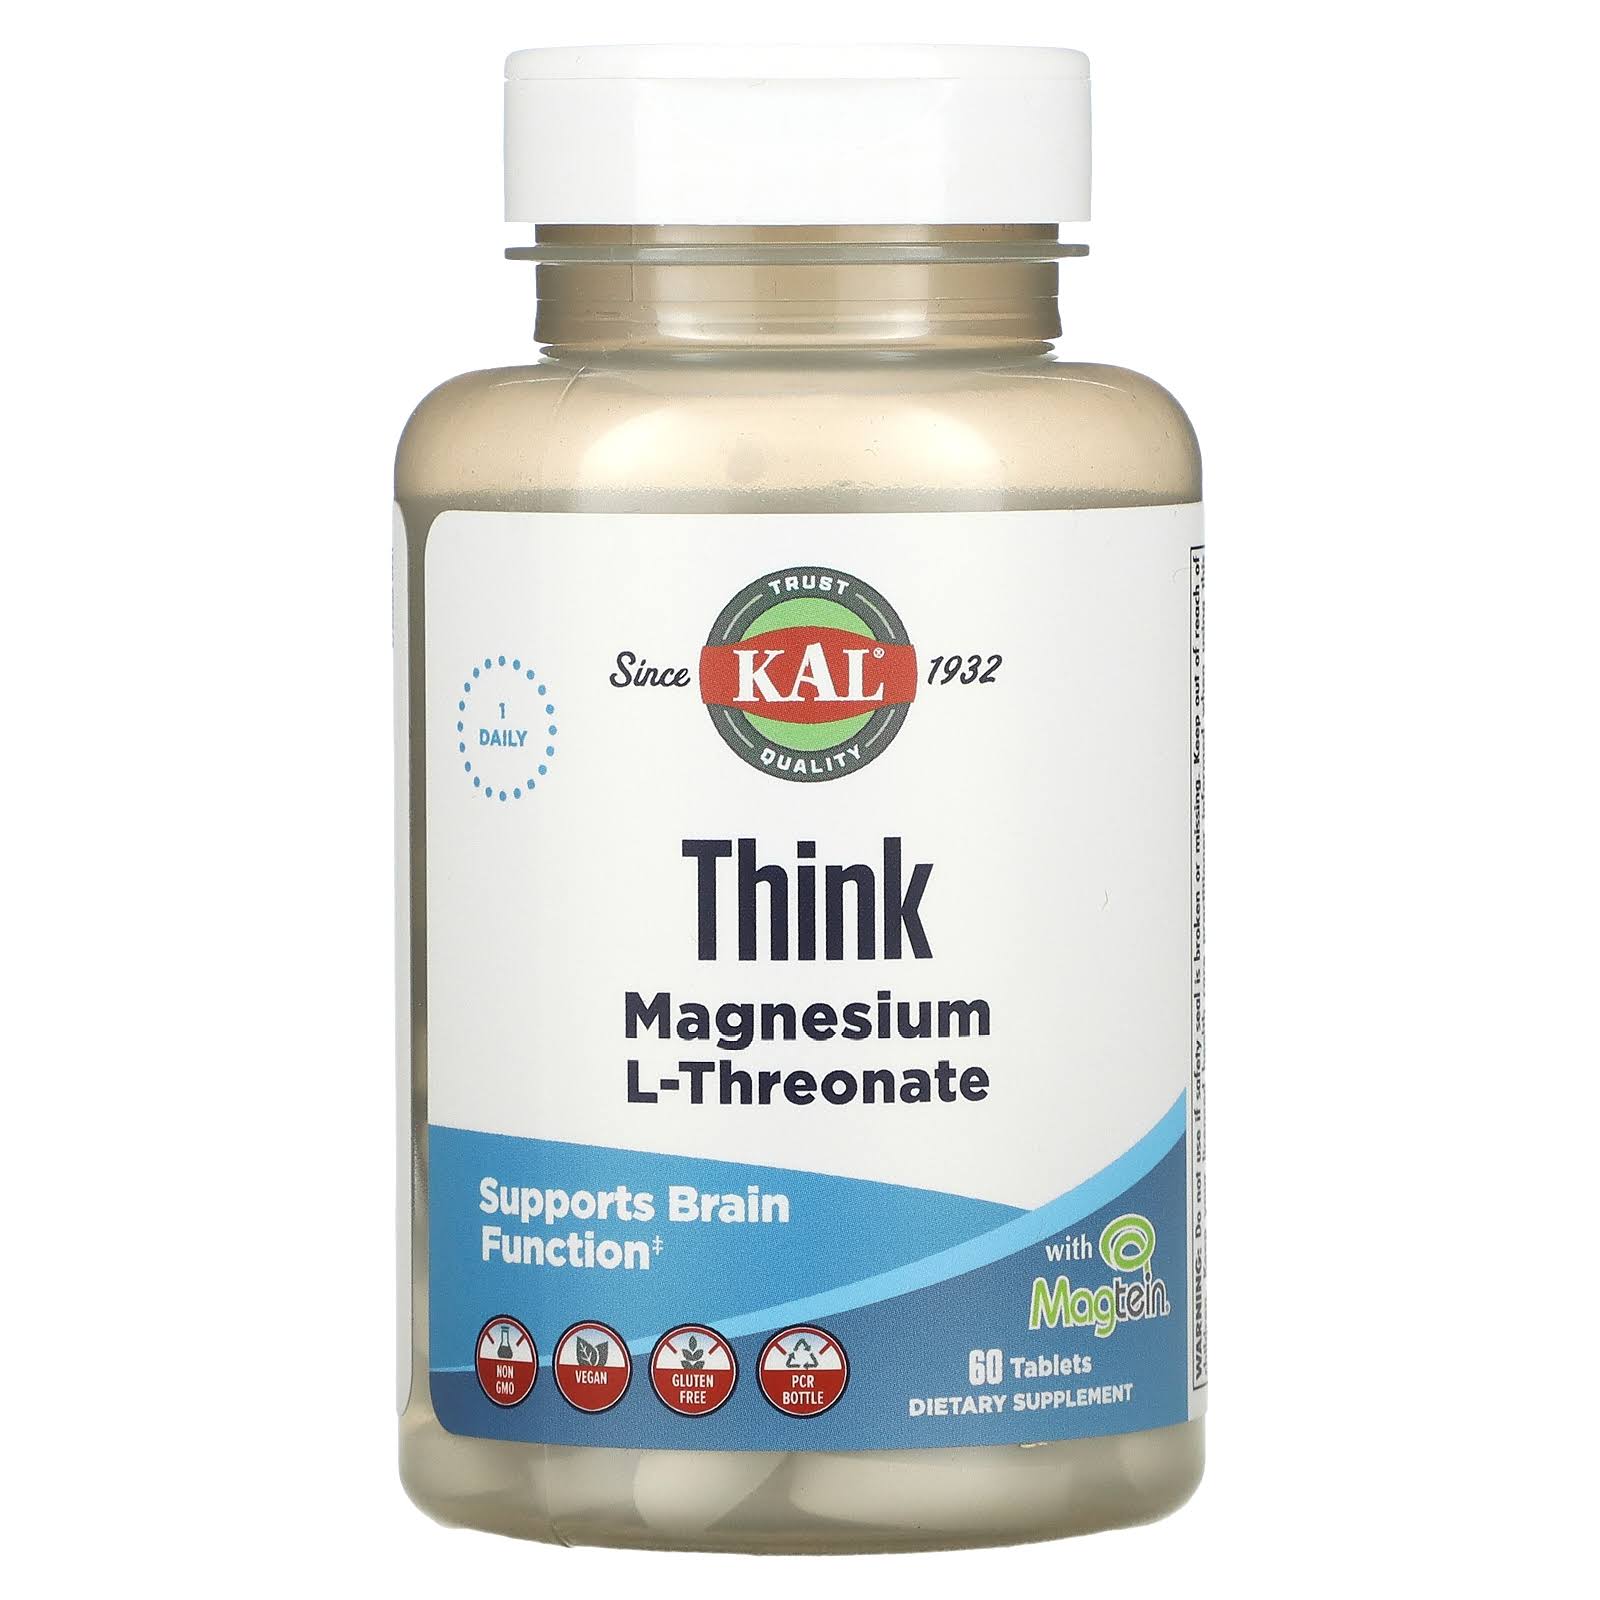 KAL, Think Magnesium L-Threonate, 2000 mg, 60 Tablets